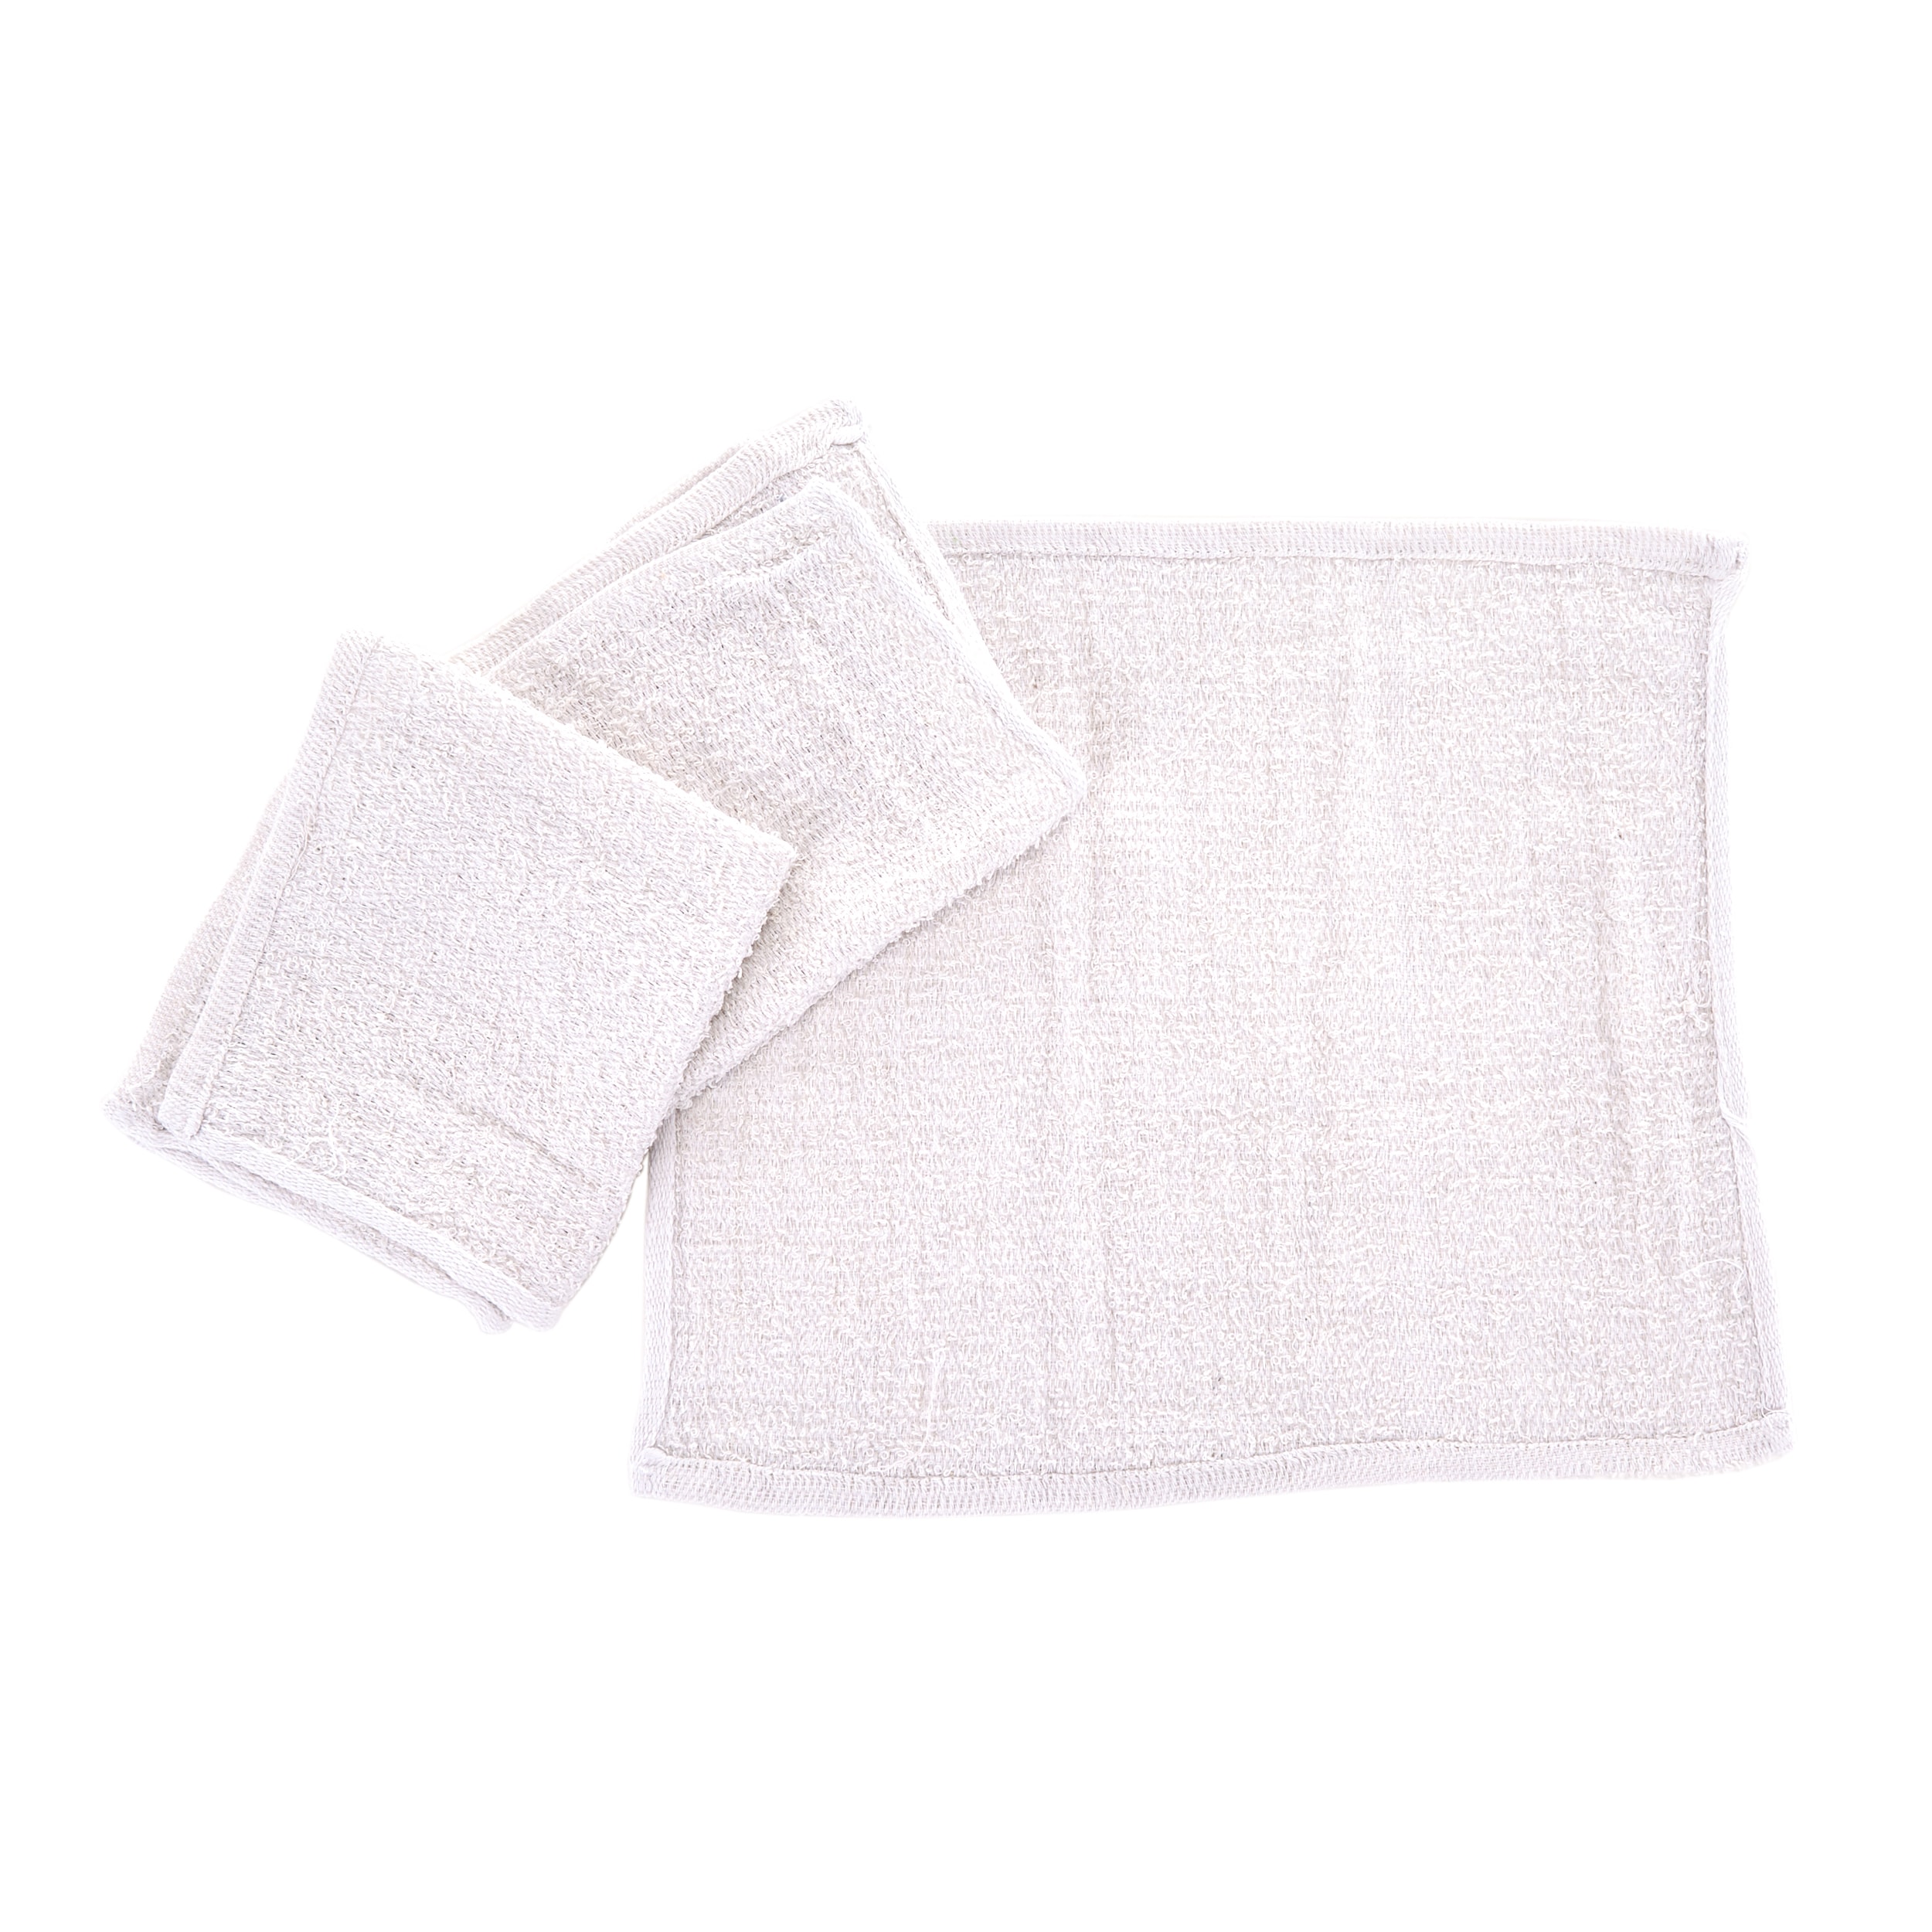 Jones Stephens Cotton Terry Cloth Towels 8 Pack B05026